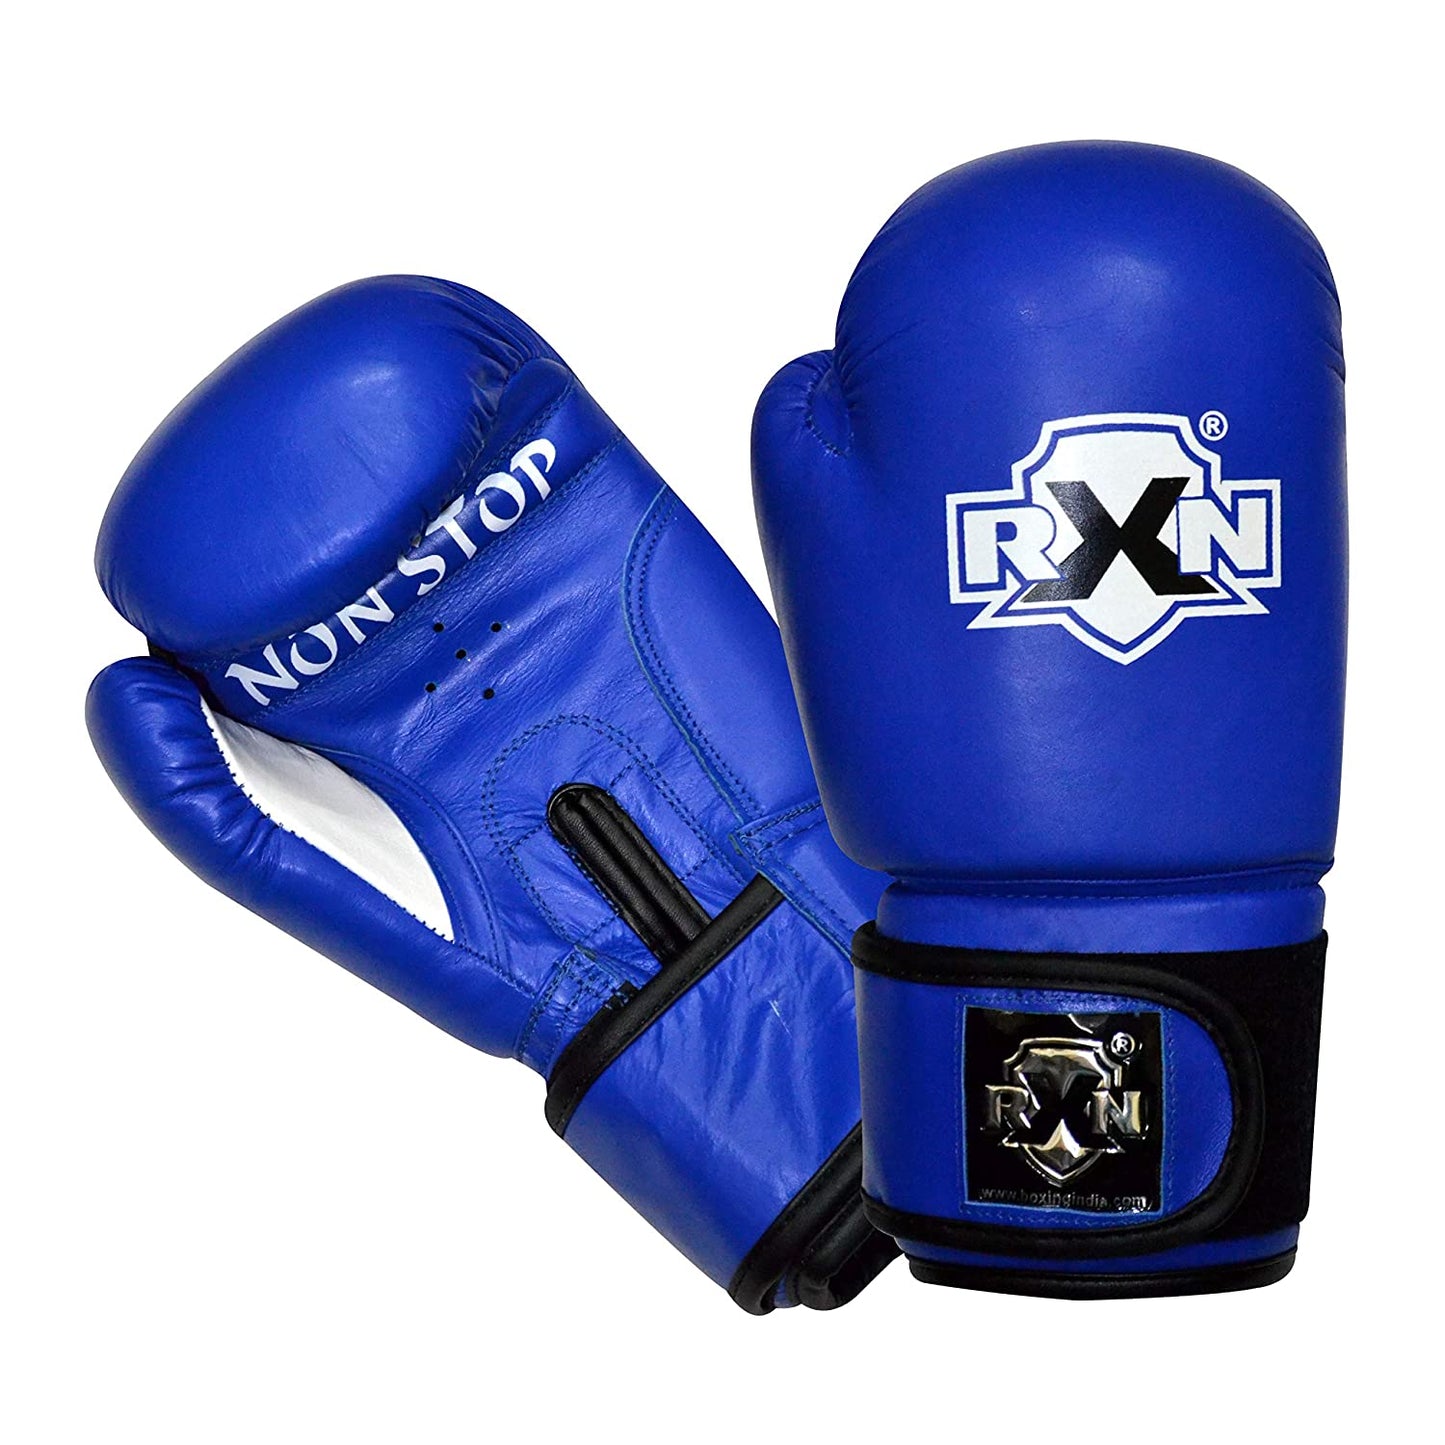 RXN BG-11 Blue Boxing Glove